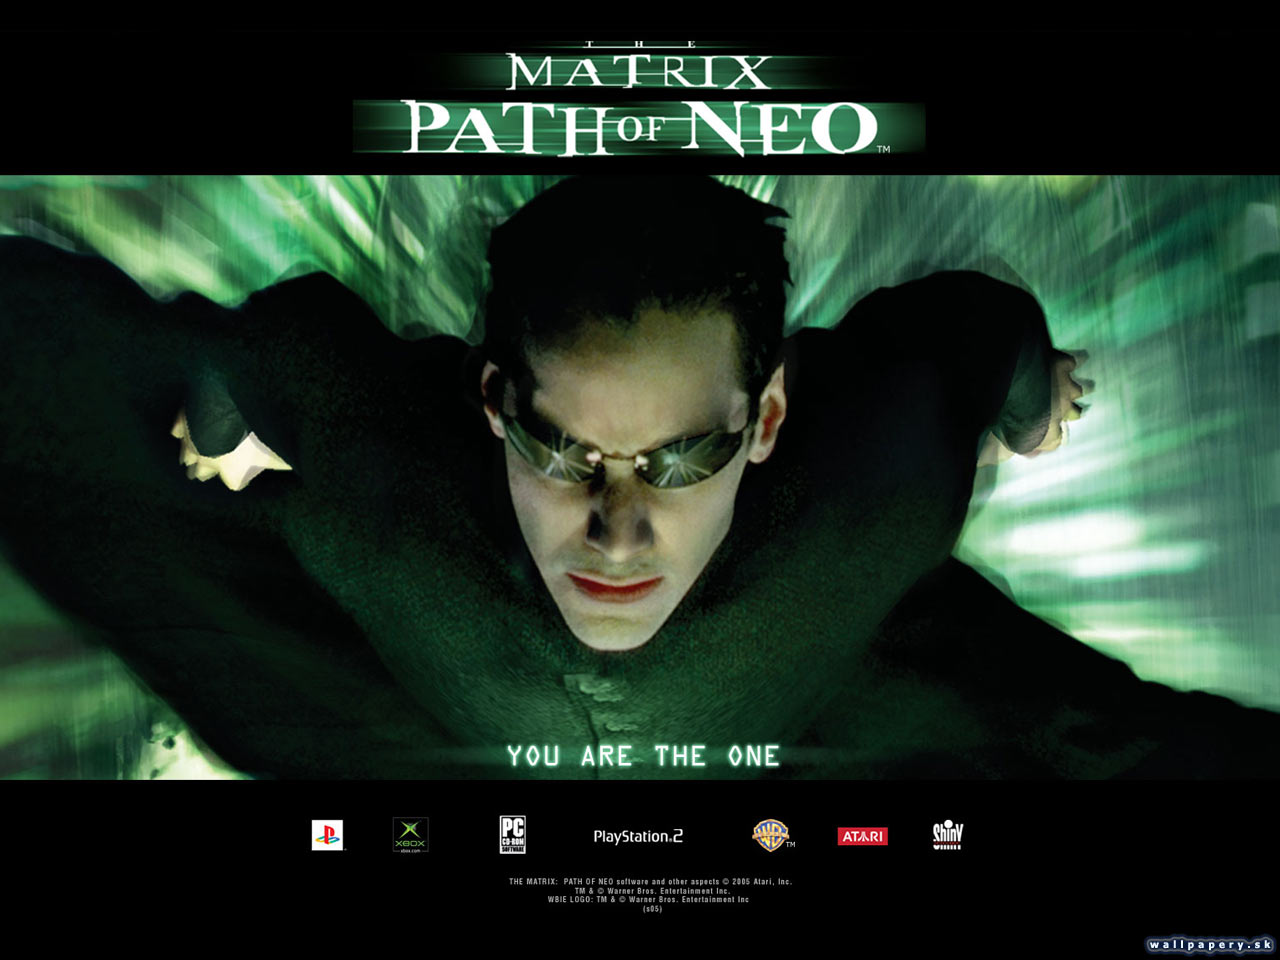 The Matrix: Path of Neo - wallpaper 5